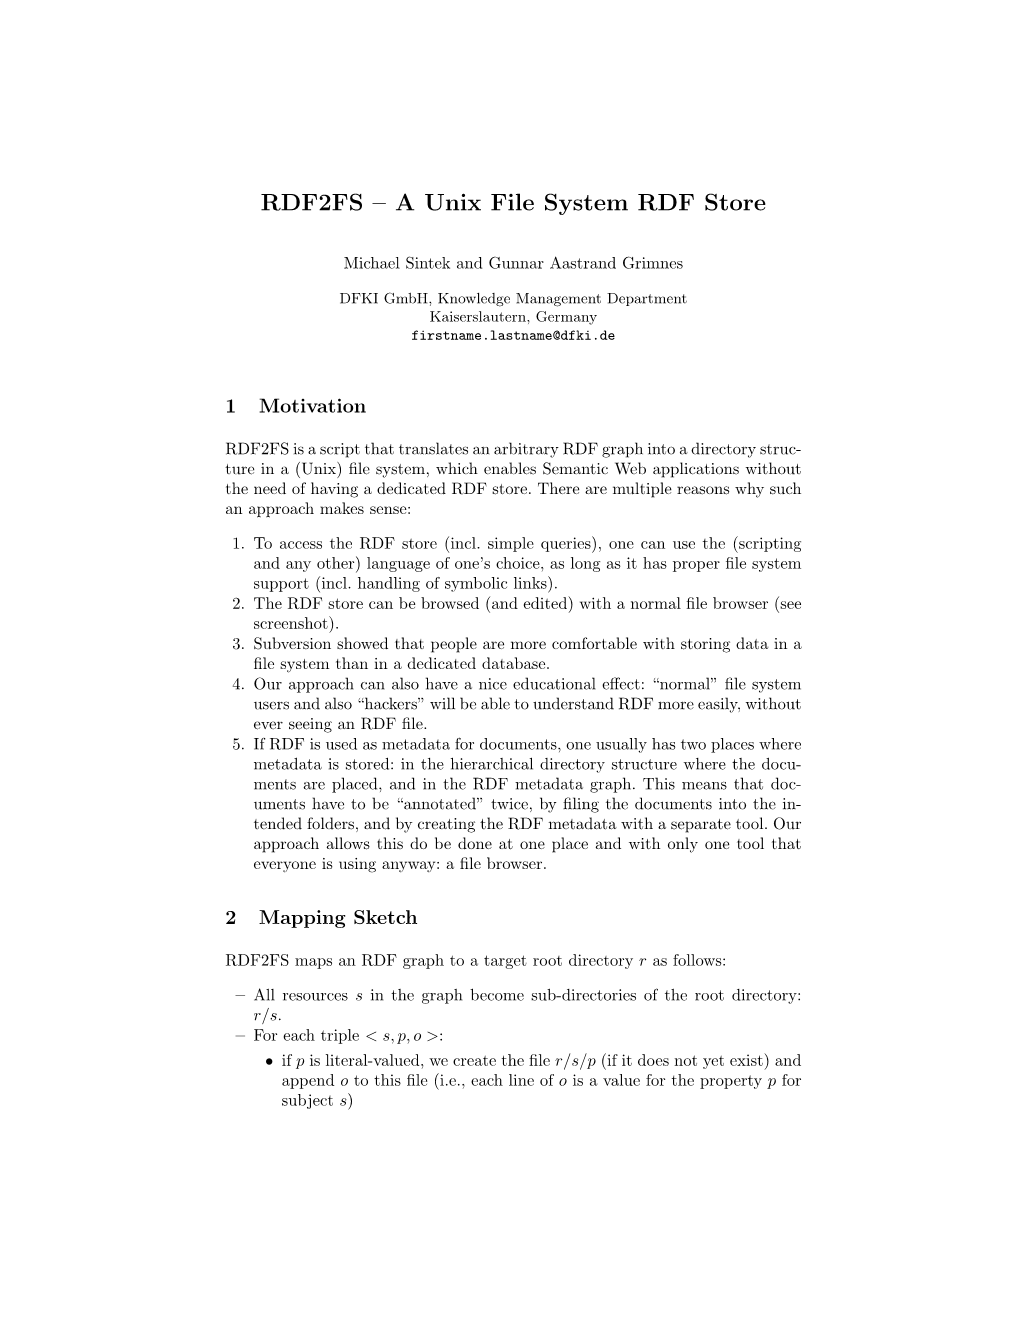 RDF2FS – a Unix File System RDF Store